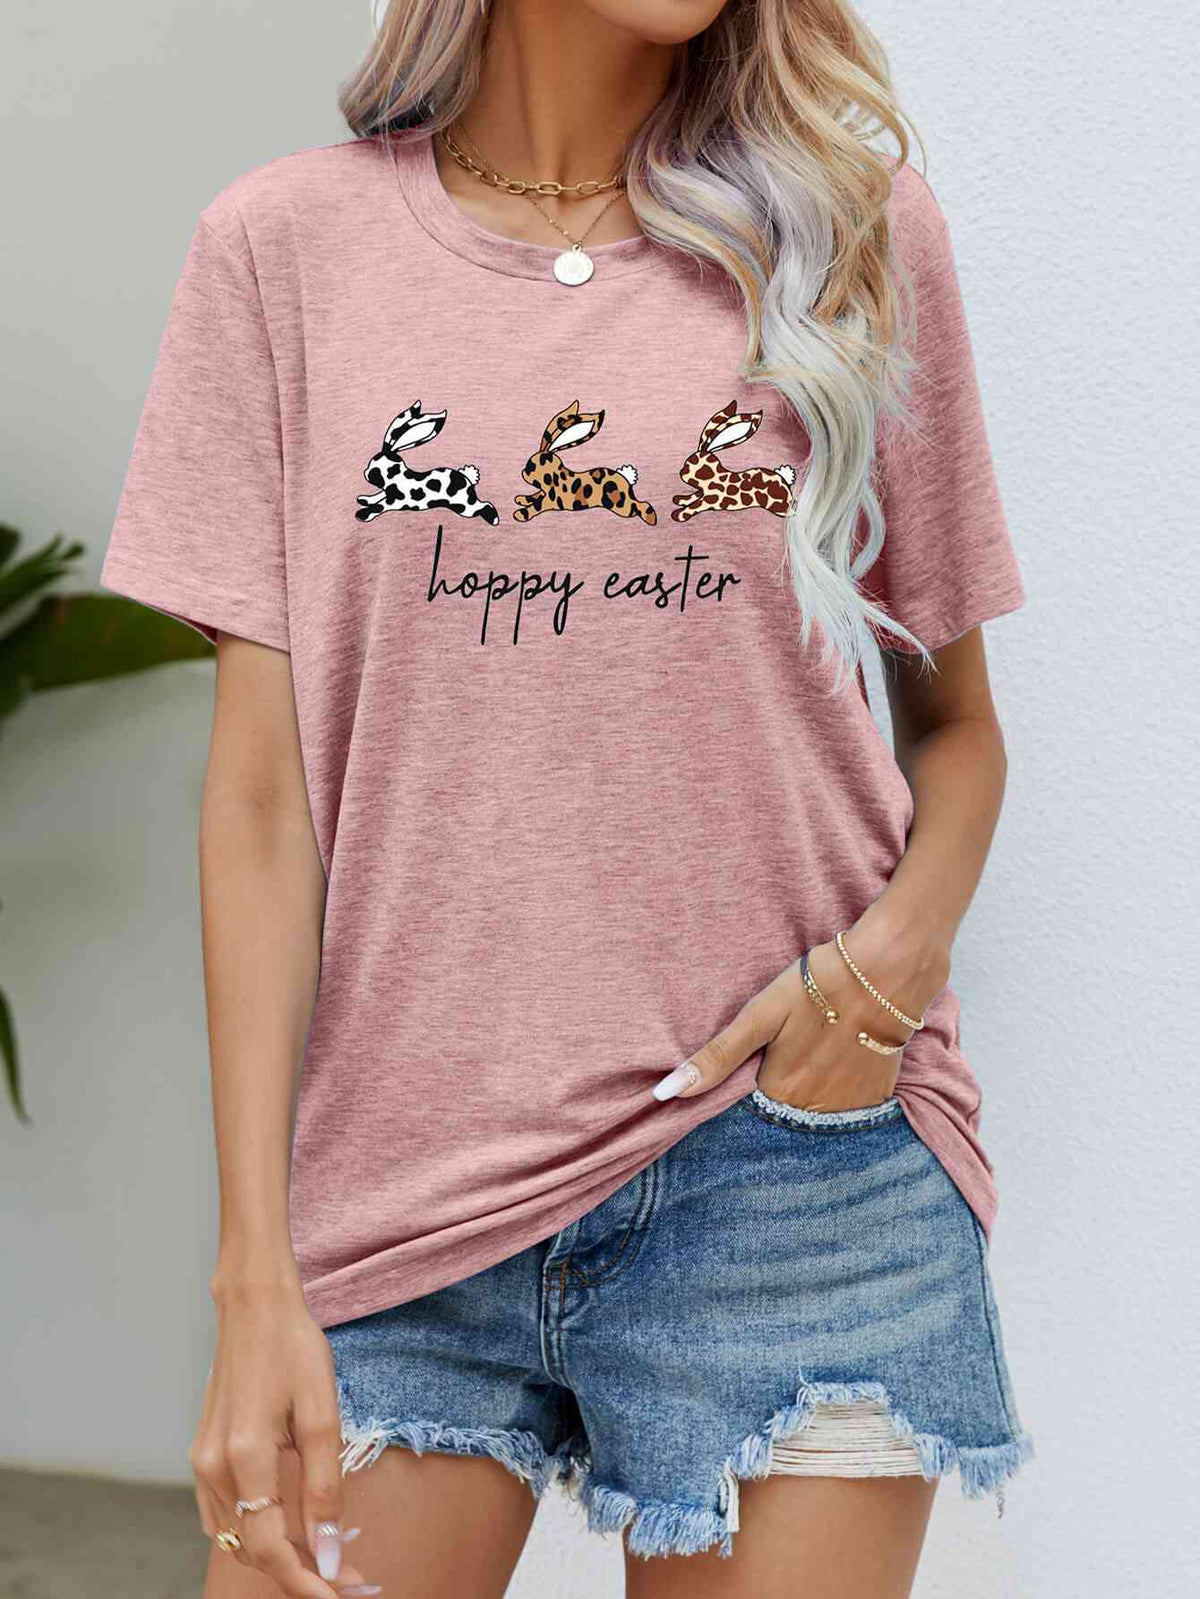 HOPPY EASTER Bunny Graphic Tee Shirts